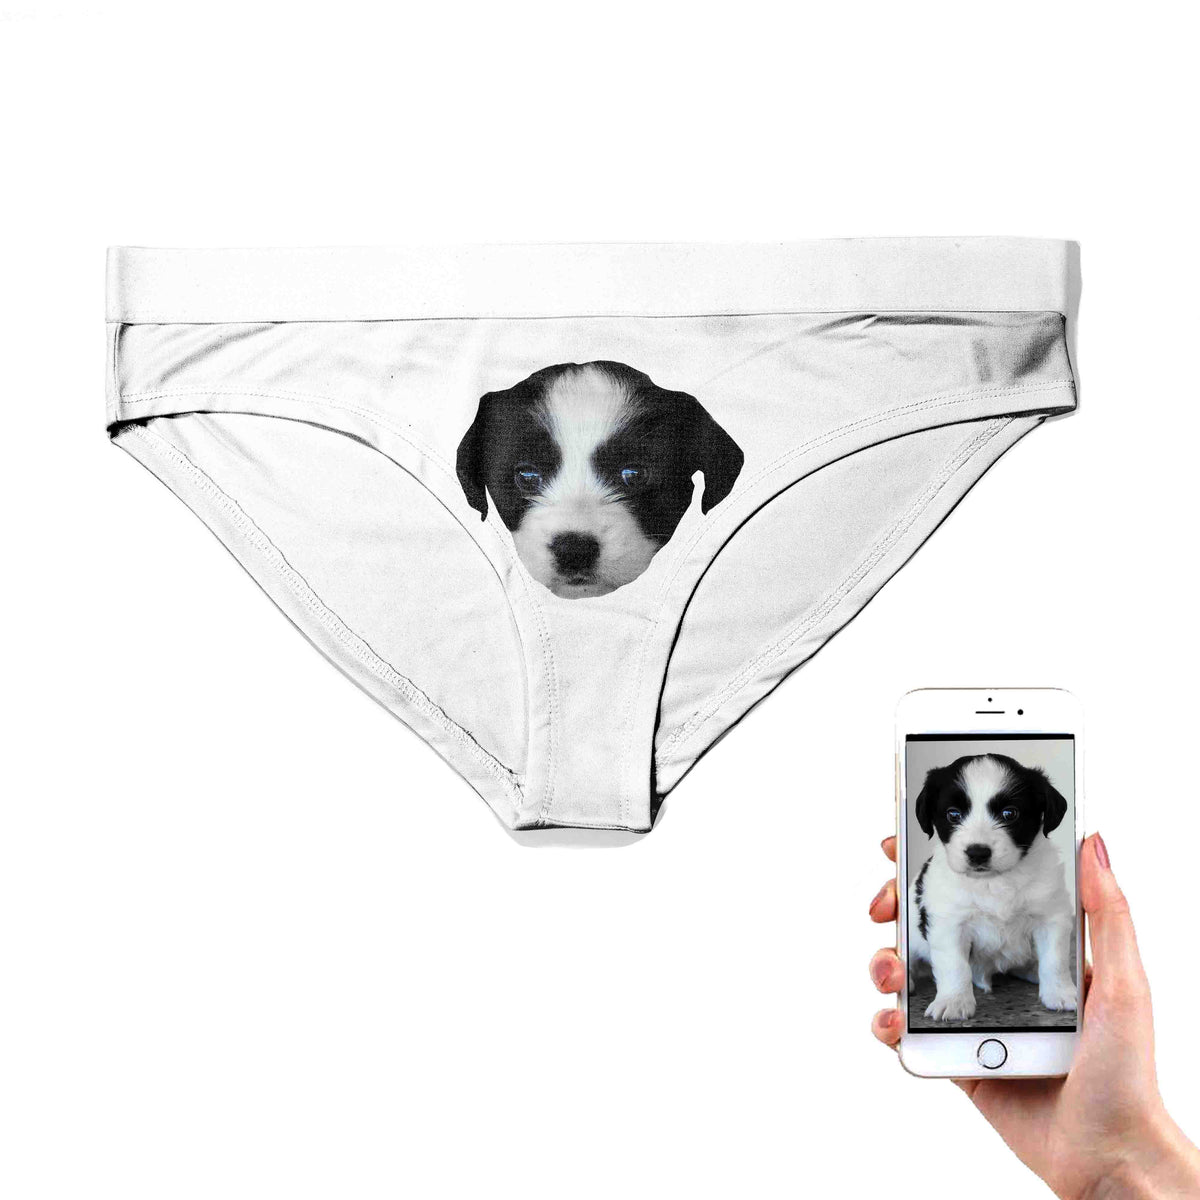 Your Dogs Face Custom Underwear! – Doggieo.au